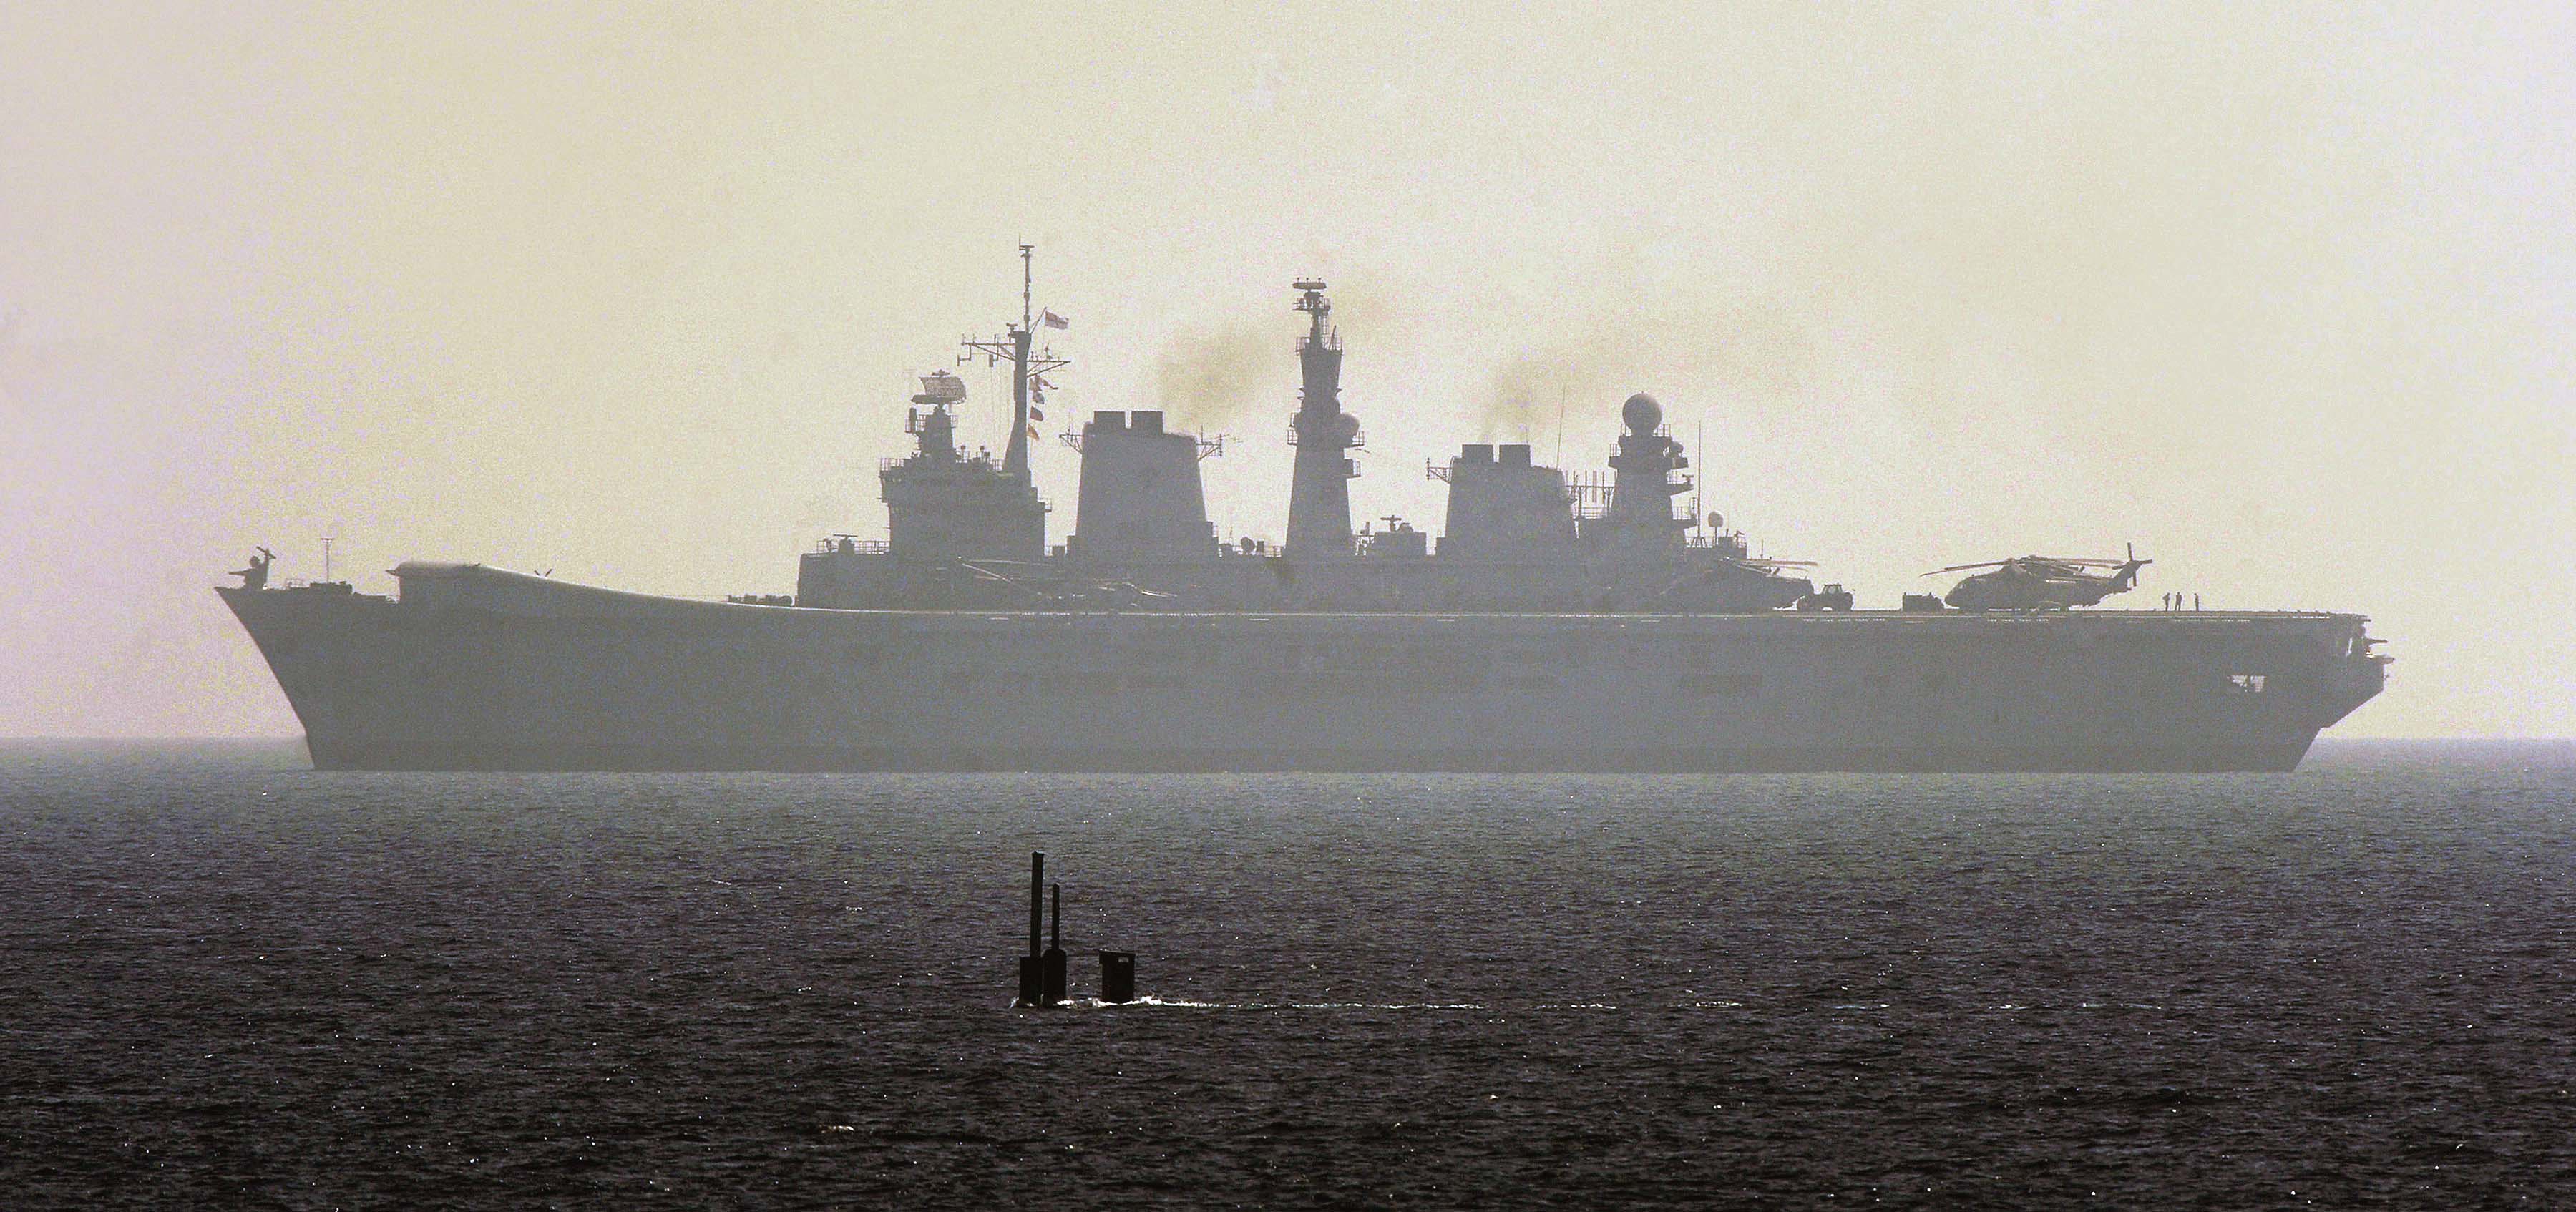 Periscope of USS Dallas and HMS Illustrious (C) Crown copyright 2013